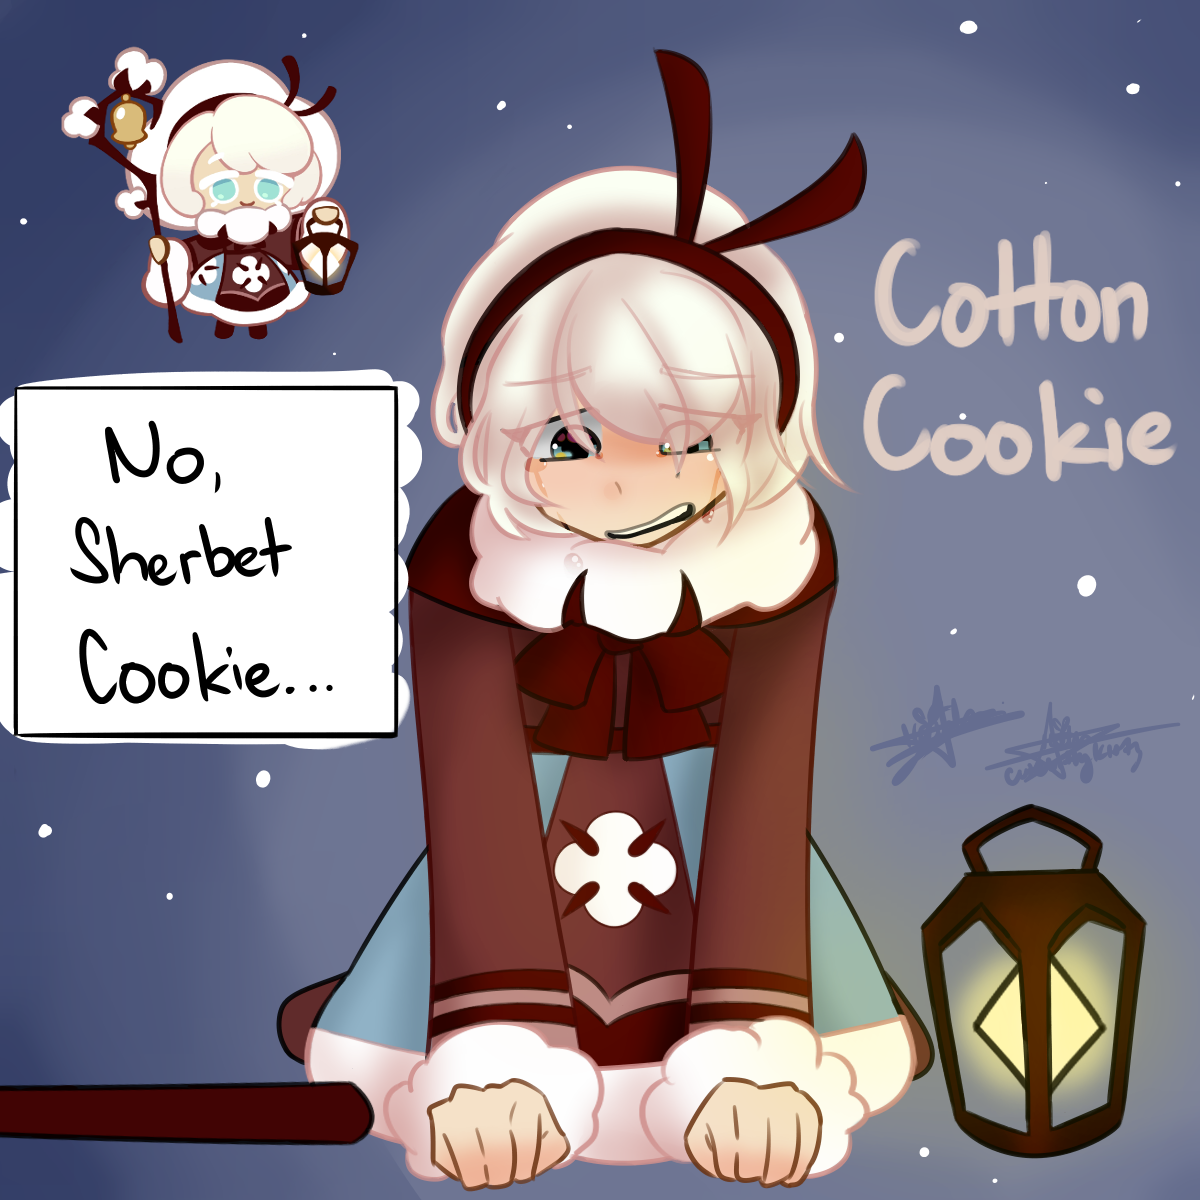 Cotton cookie